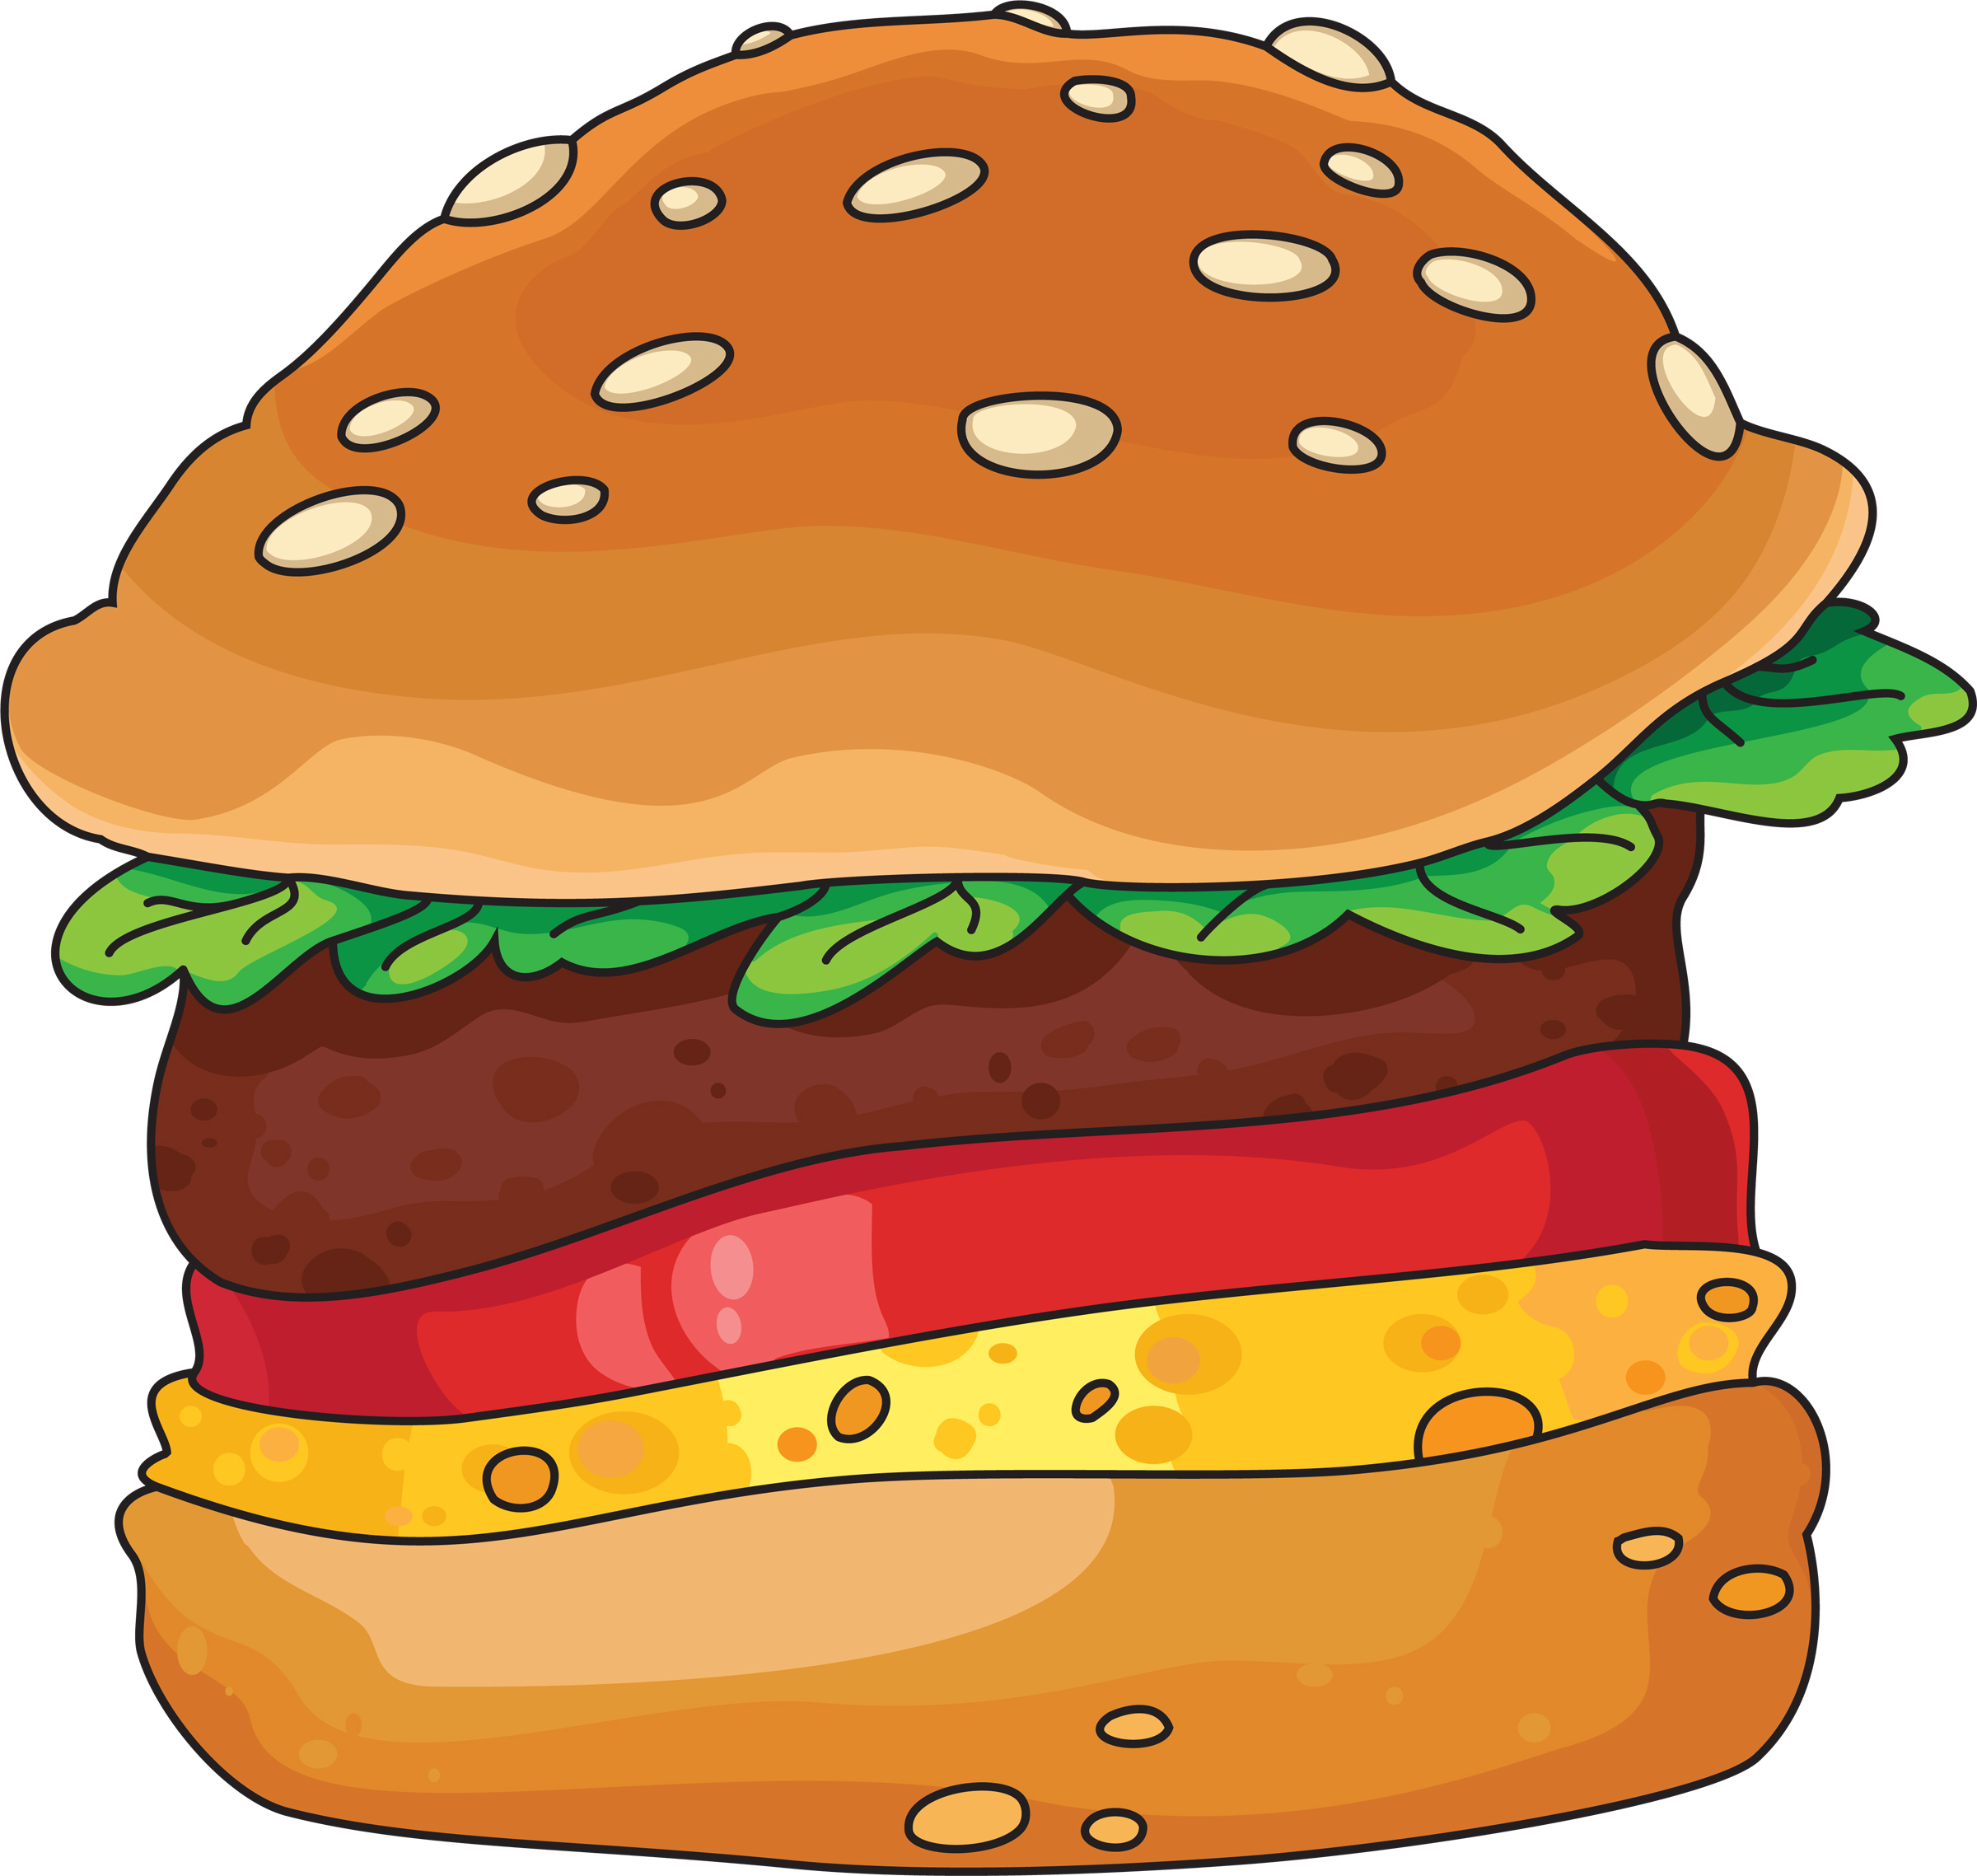 burger clipart: Illustration 